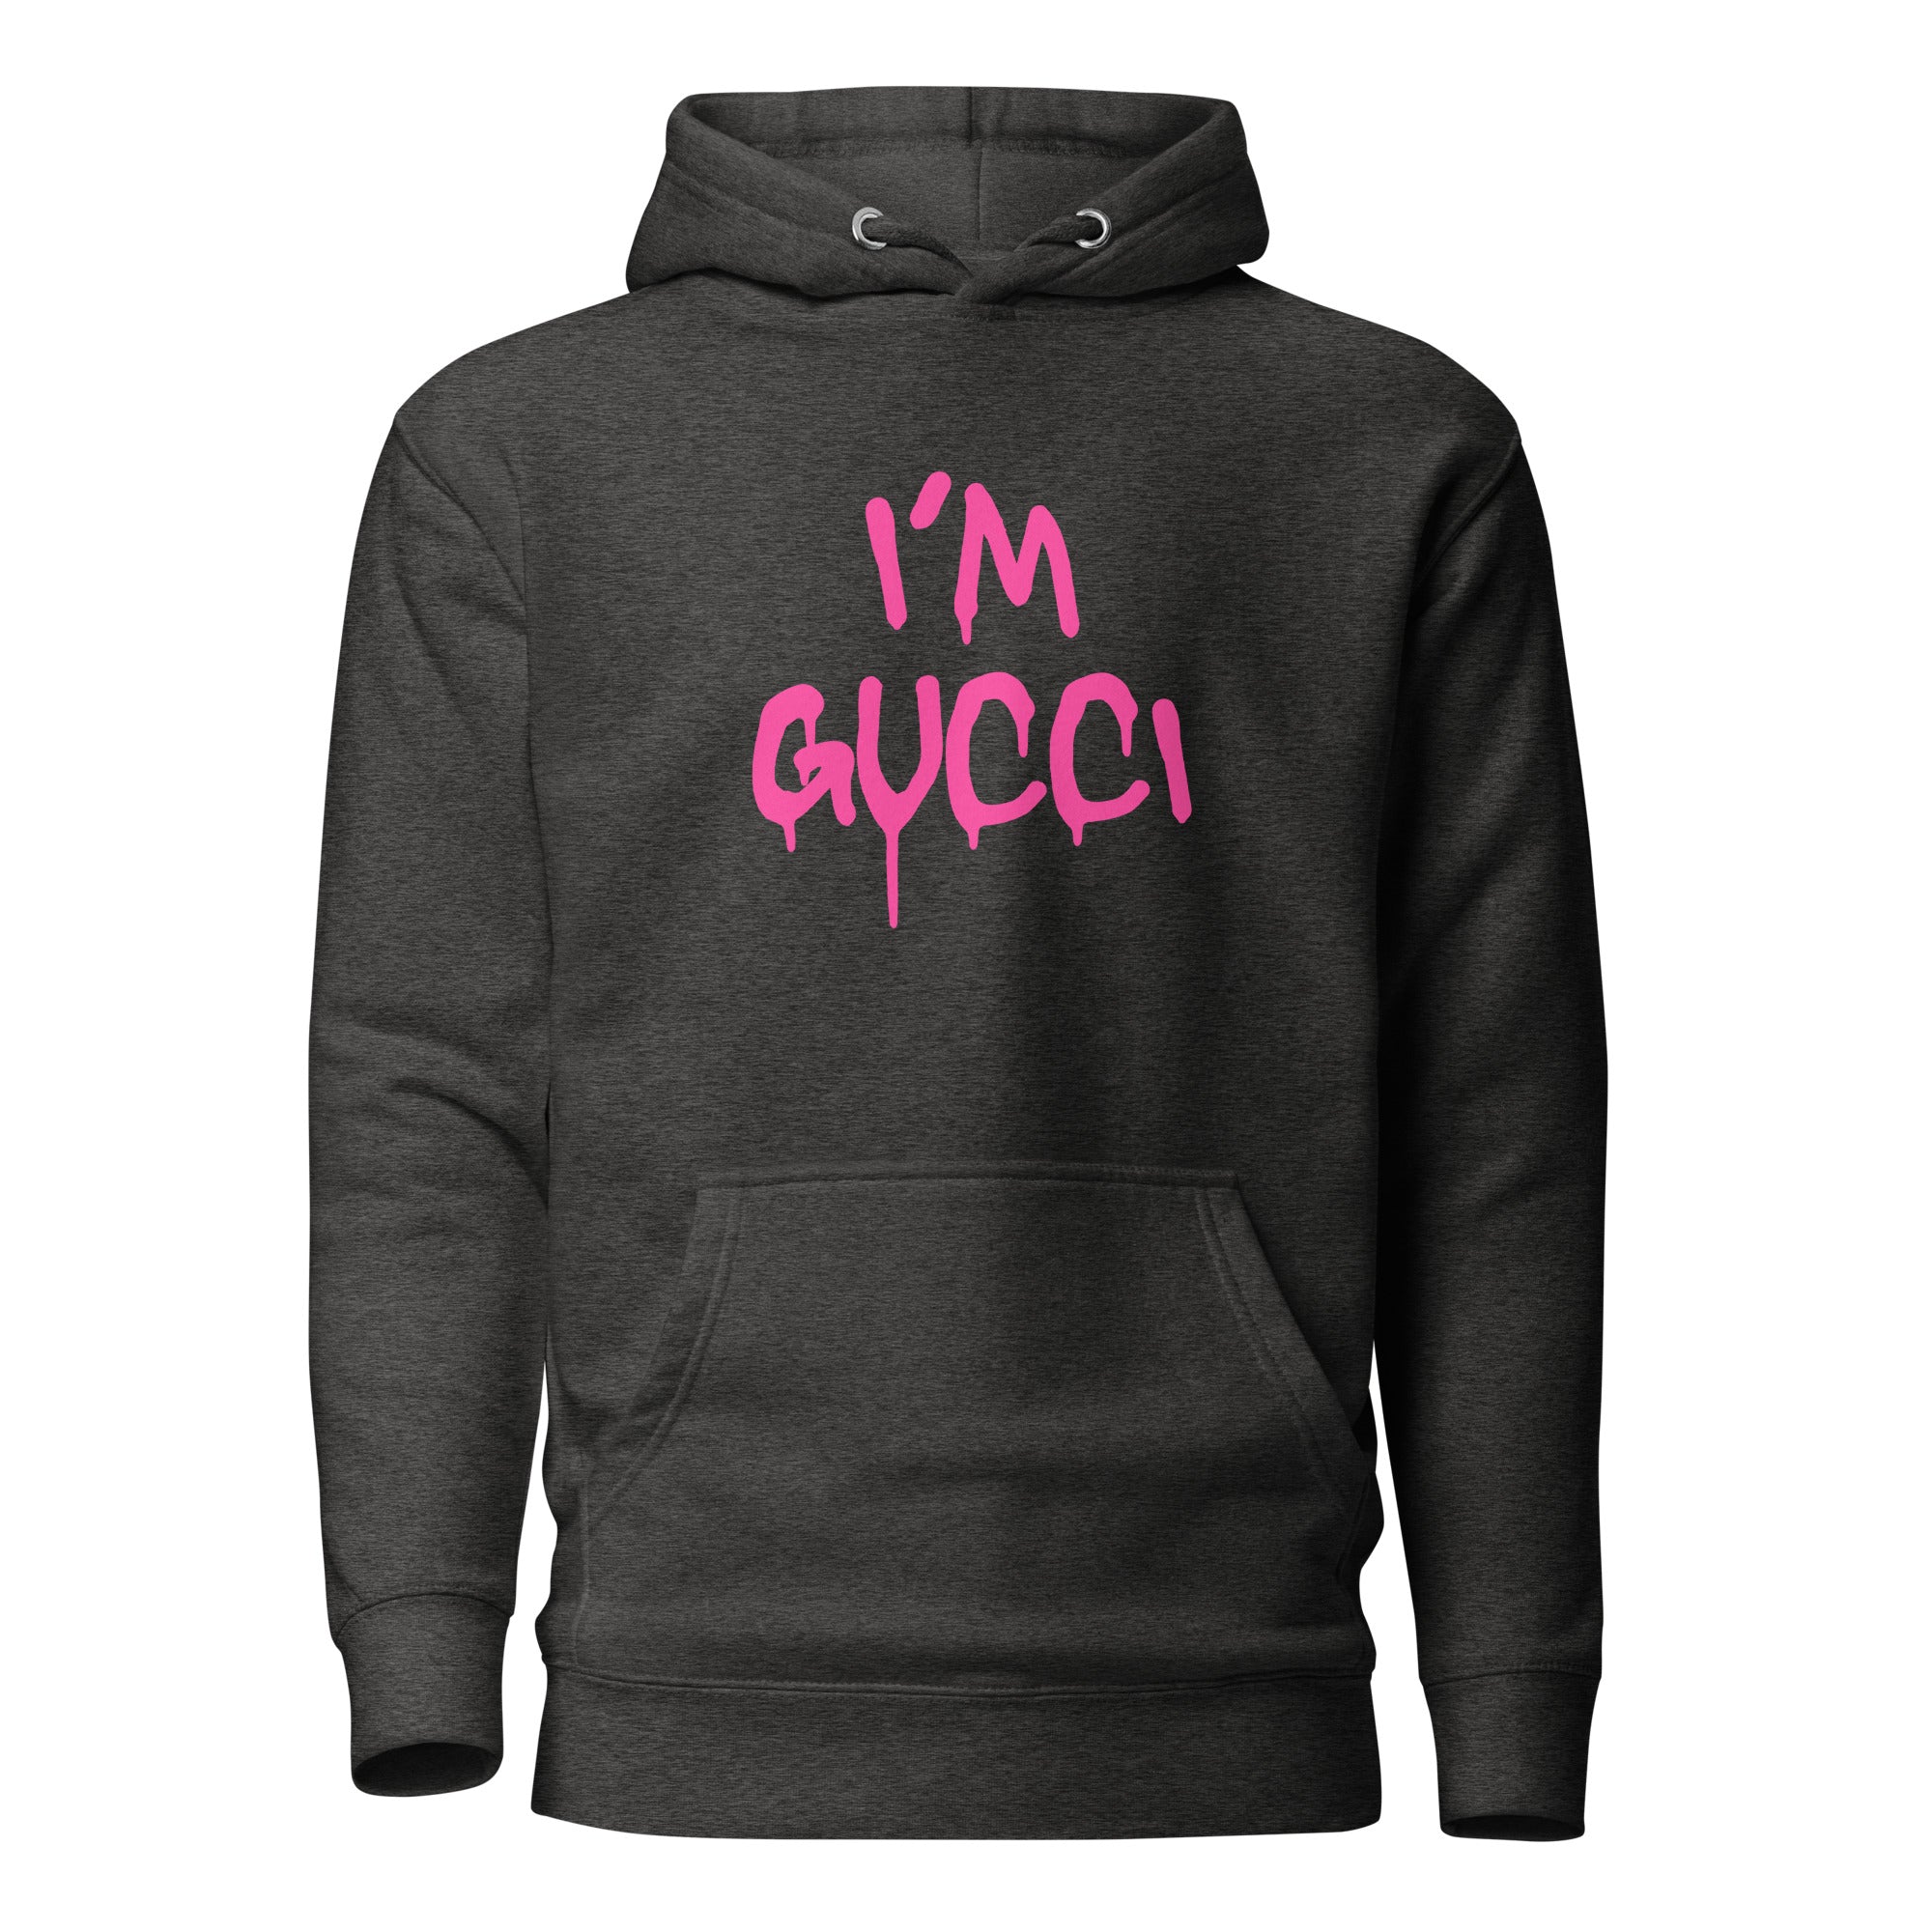 "I'm Gucci" Hoodie